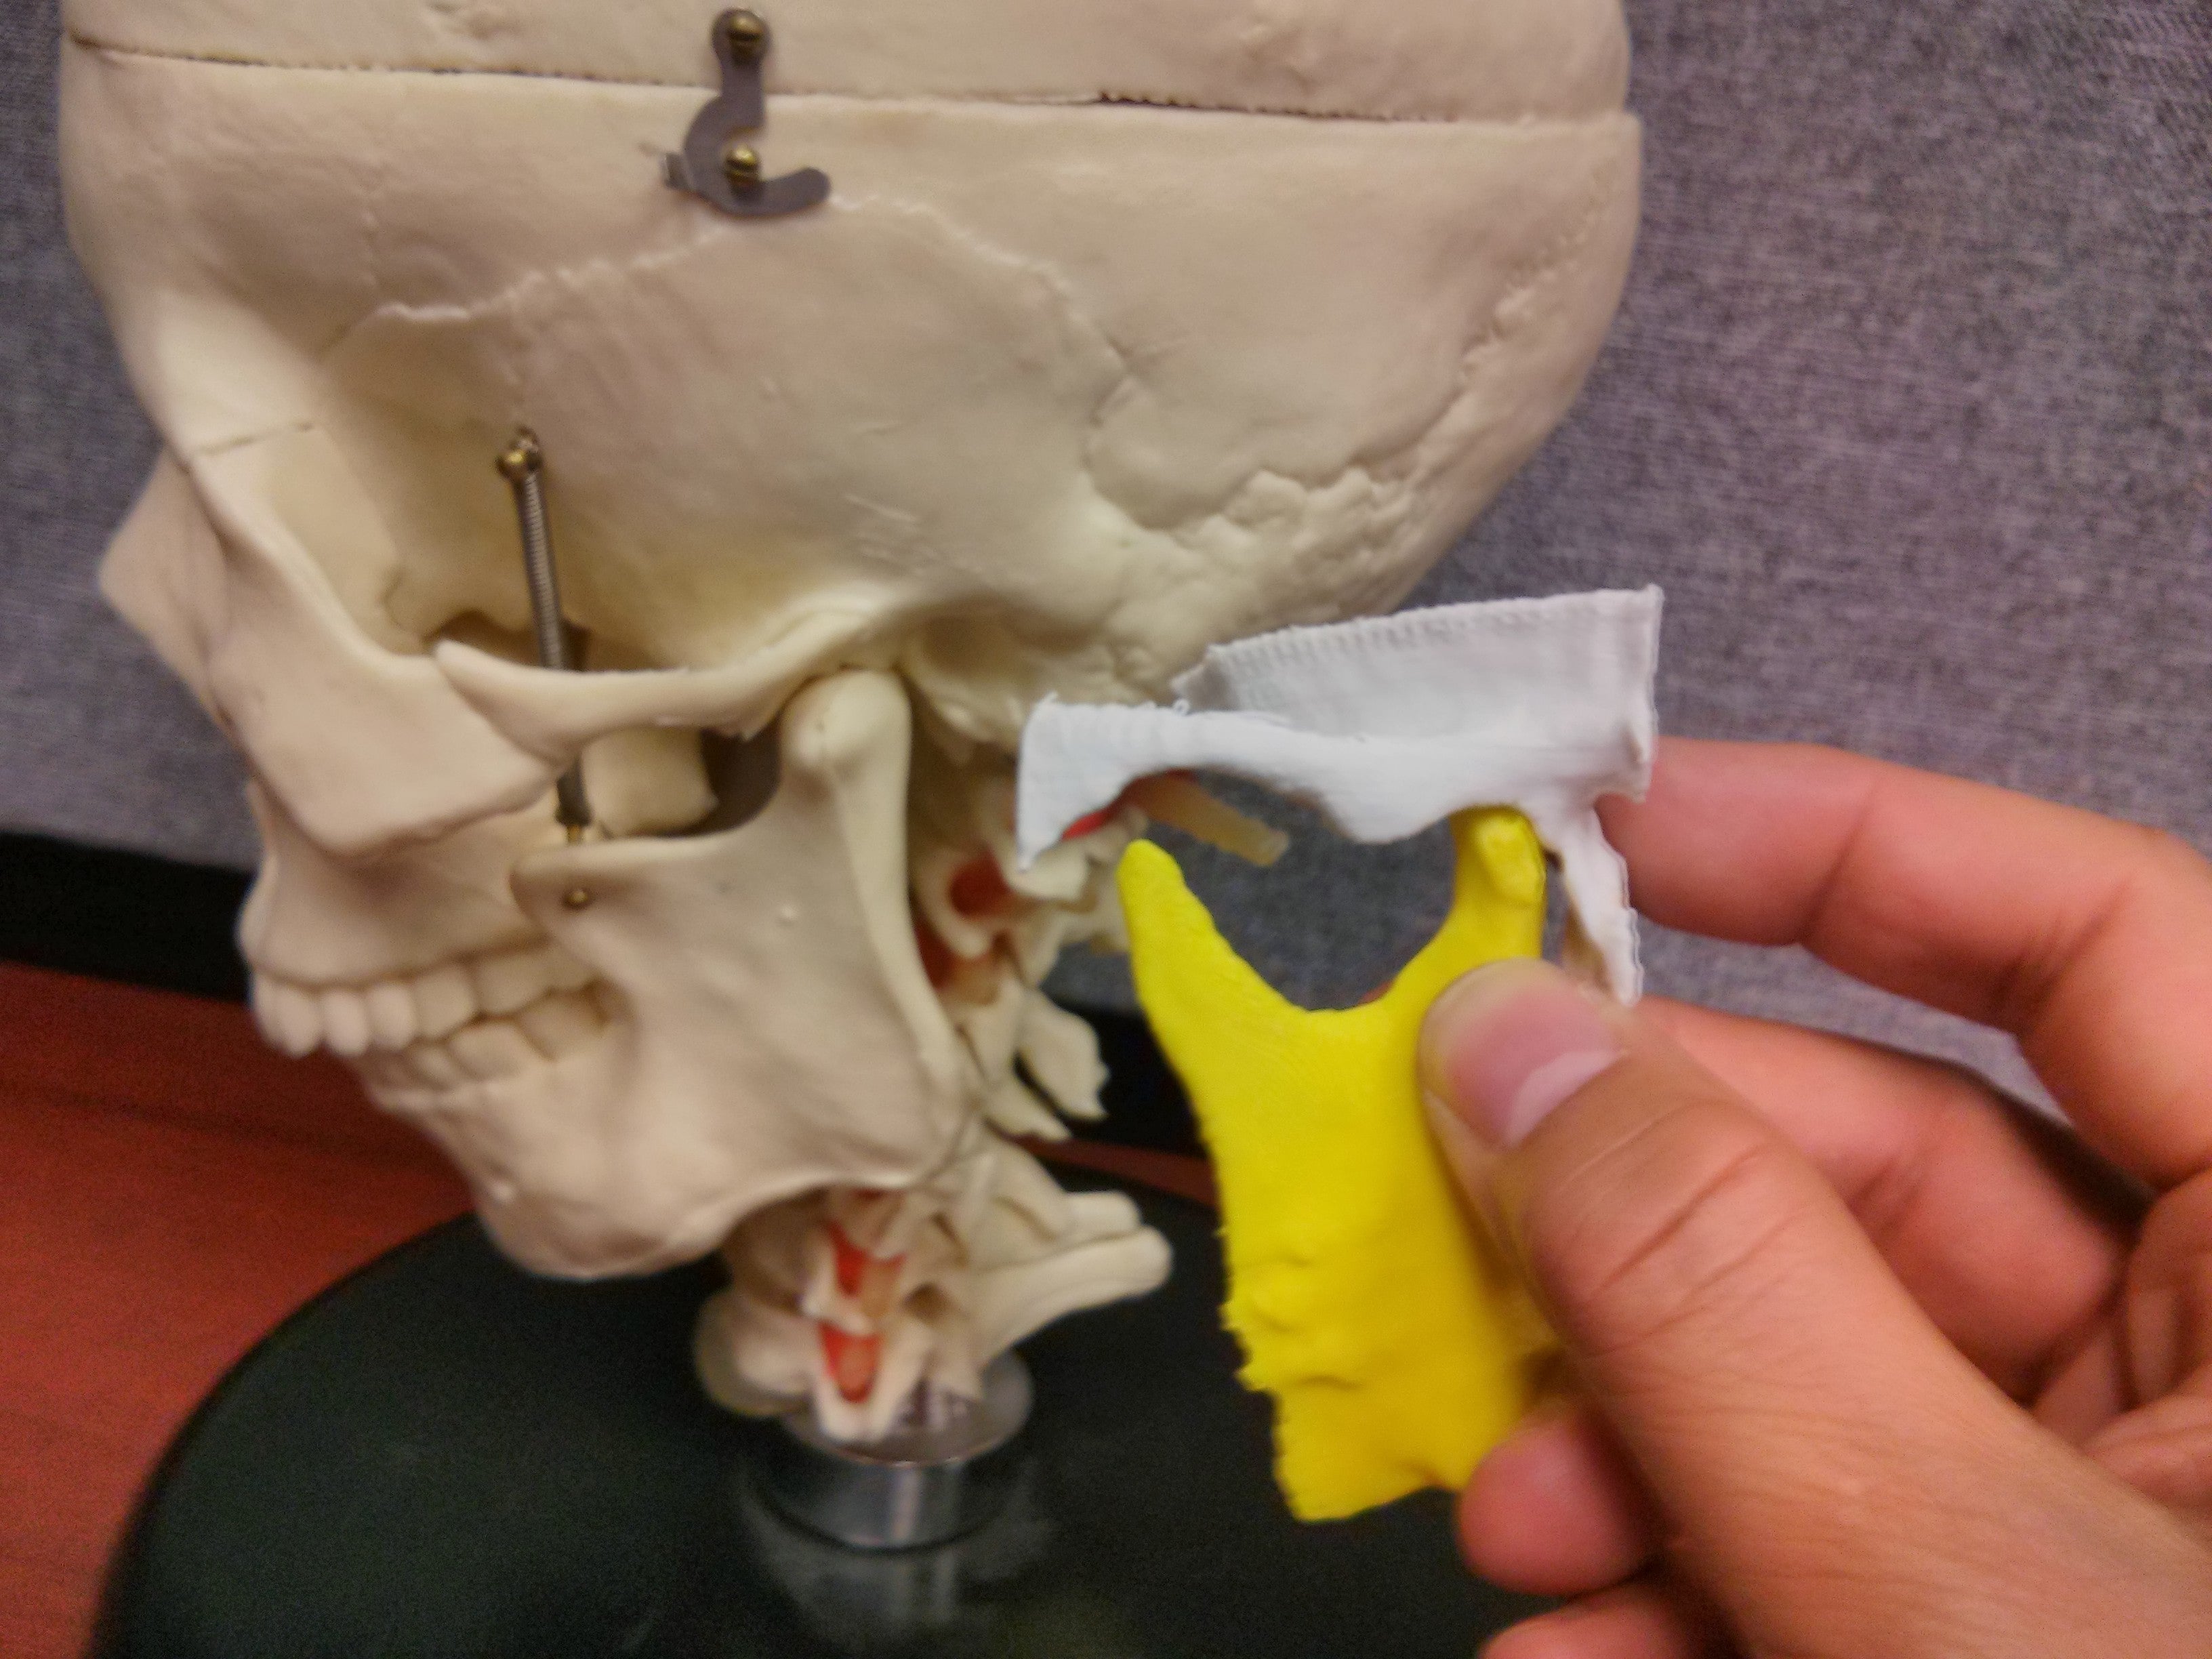 3D Printed models of the mandible and temporal bones